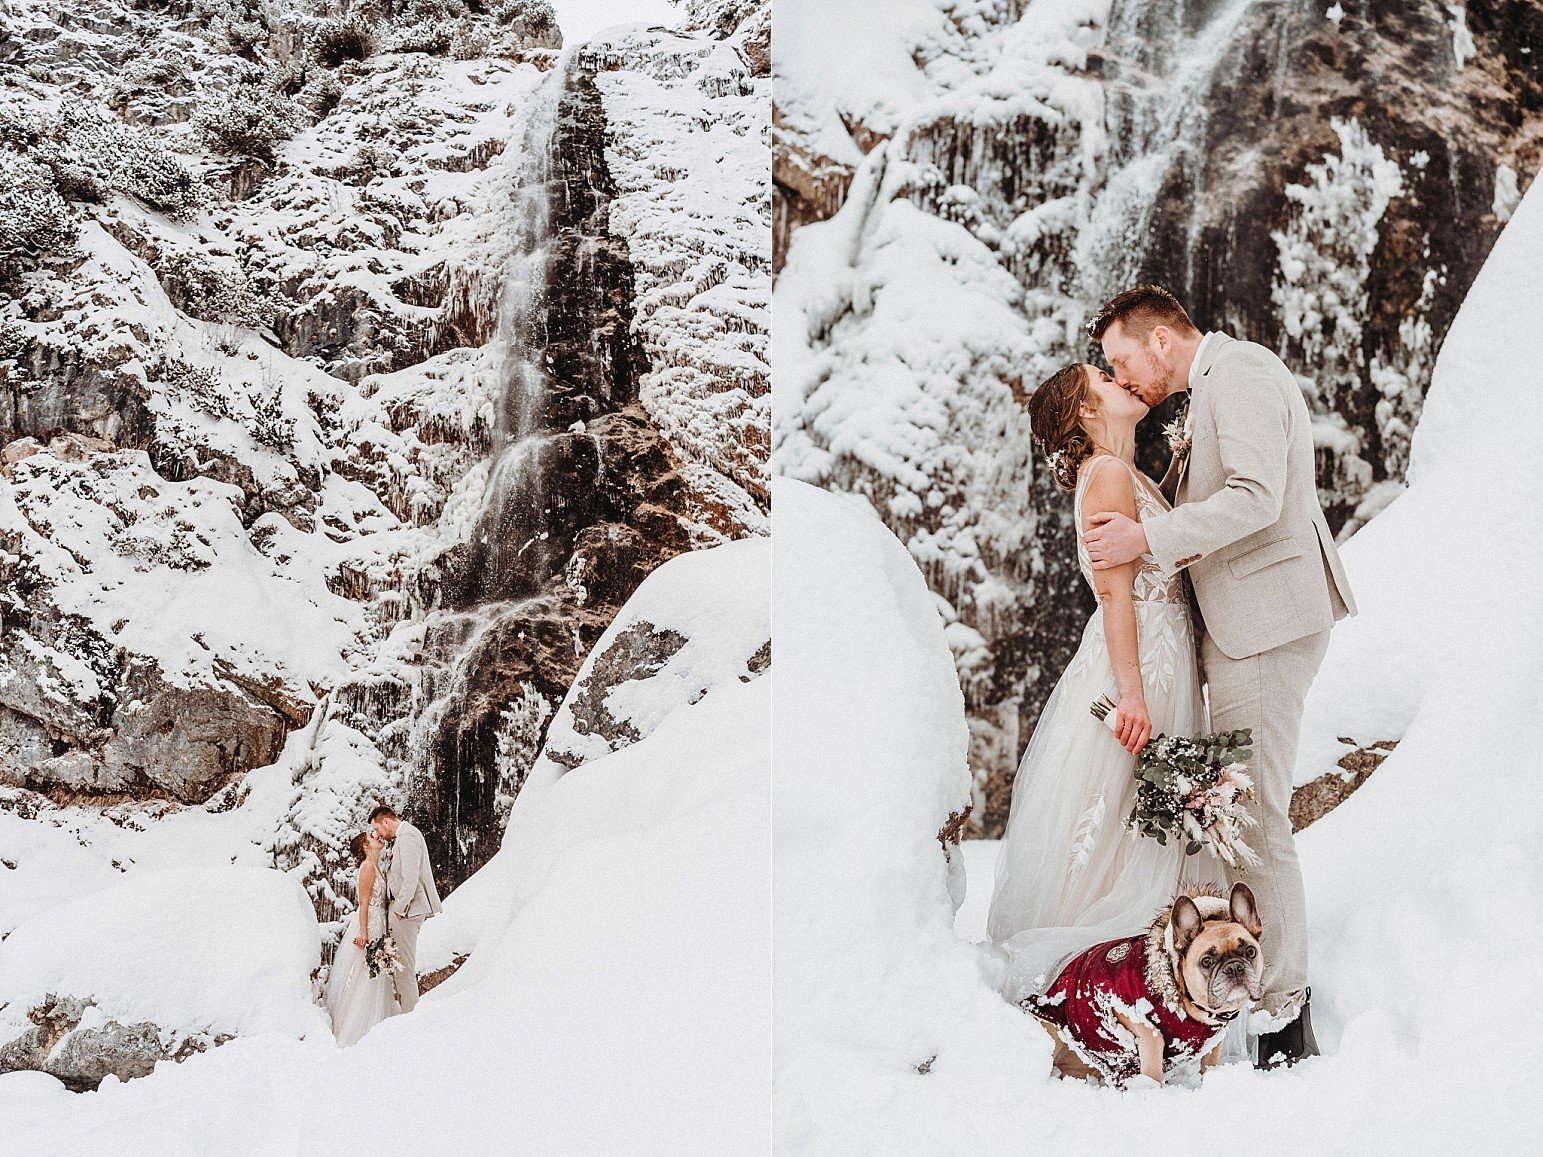 way-up-high-elopements-tirol-achensee-tyrol-small-wedding-adventure-hochzeit-eloping-winter-snow-delfazer-waterfall (152).jpg